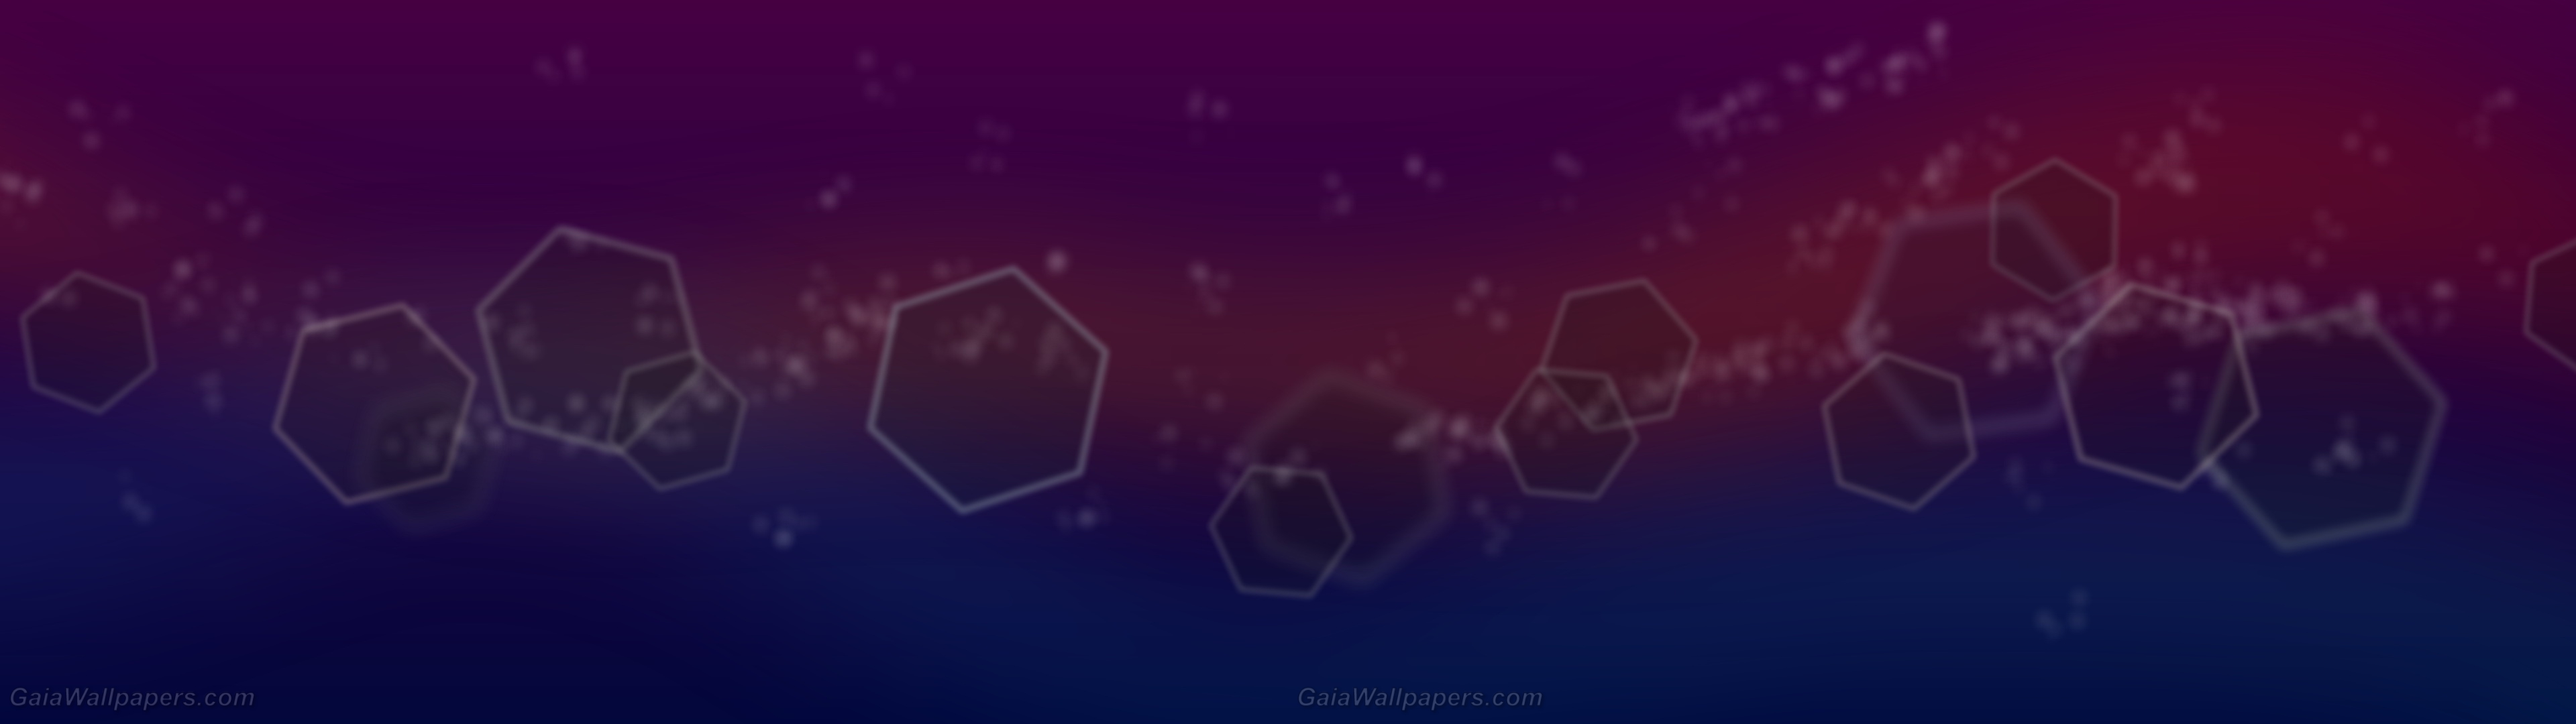 Virtual wave of hexagons - Free desktop wallpapers